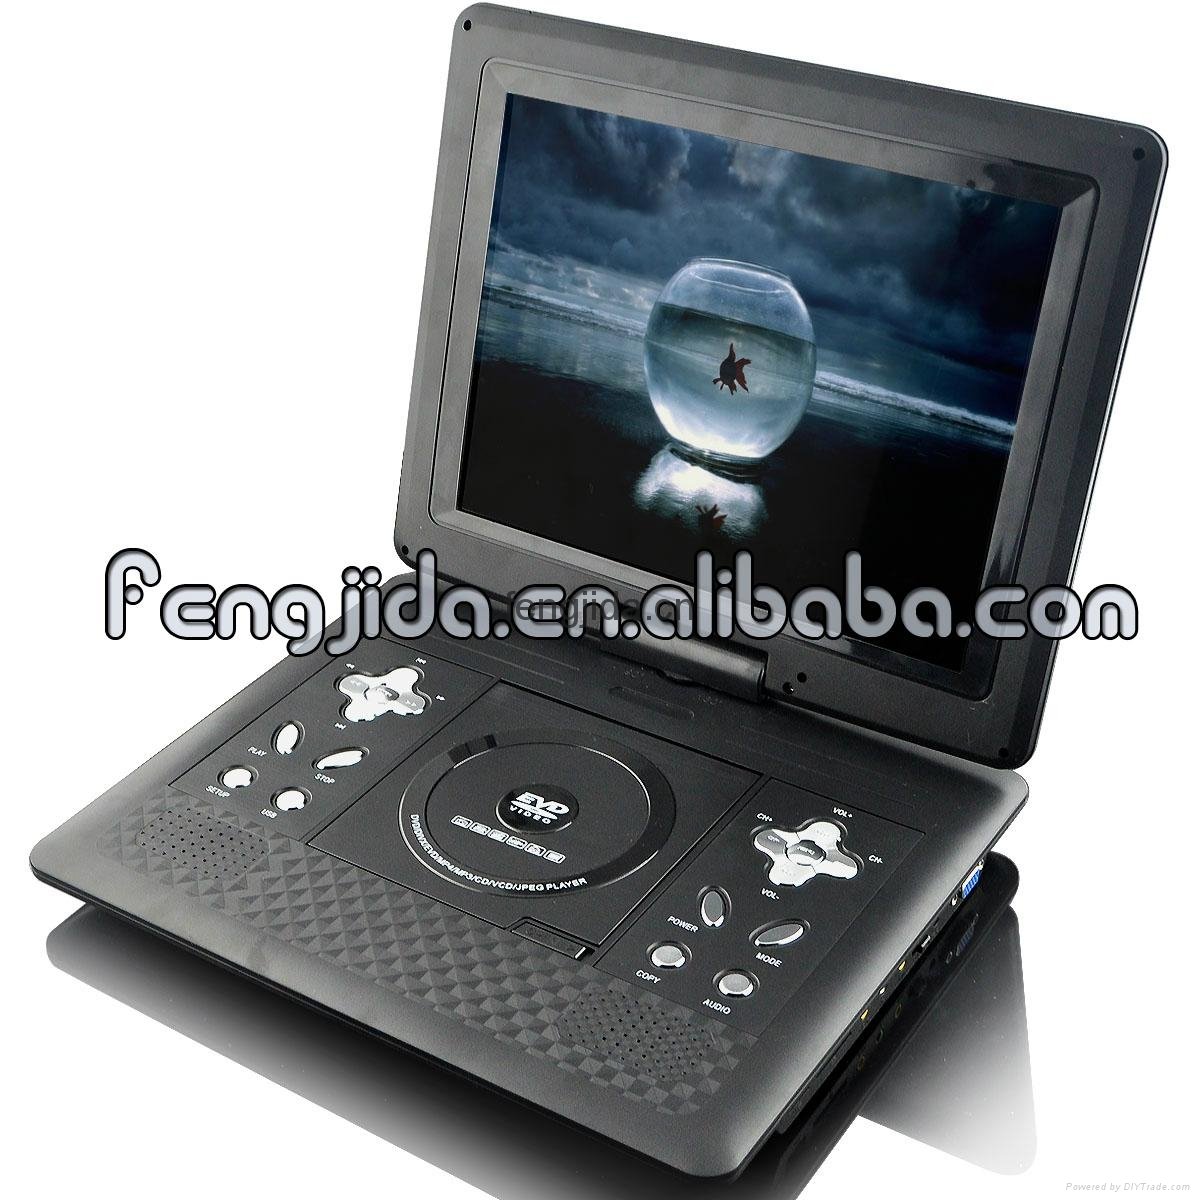  fashion design portable DVD player with VGA port